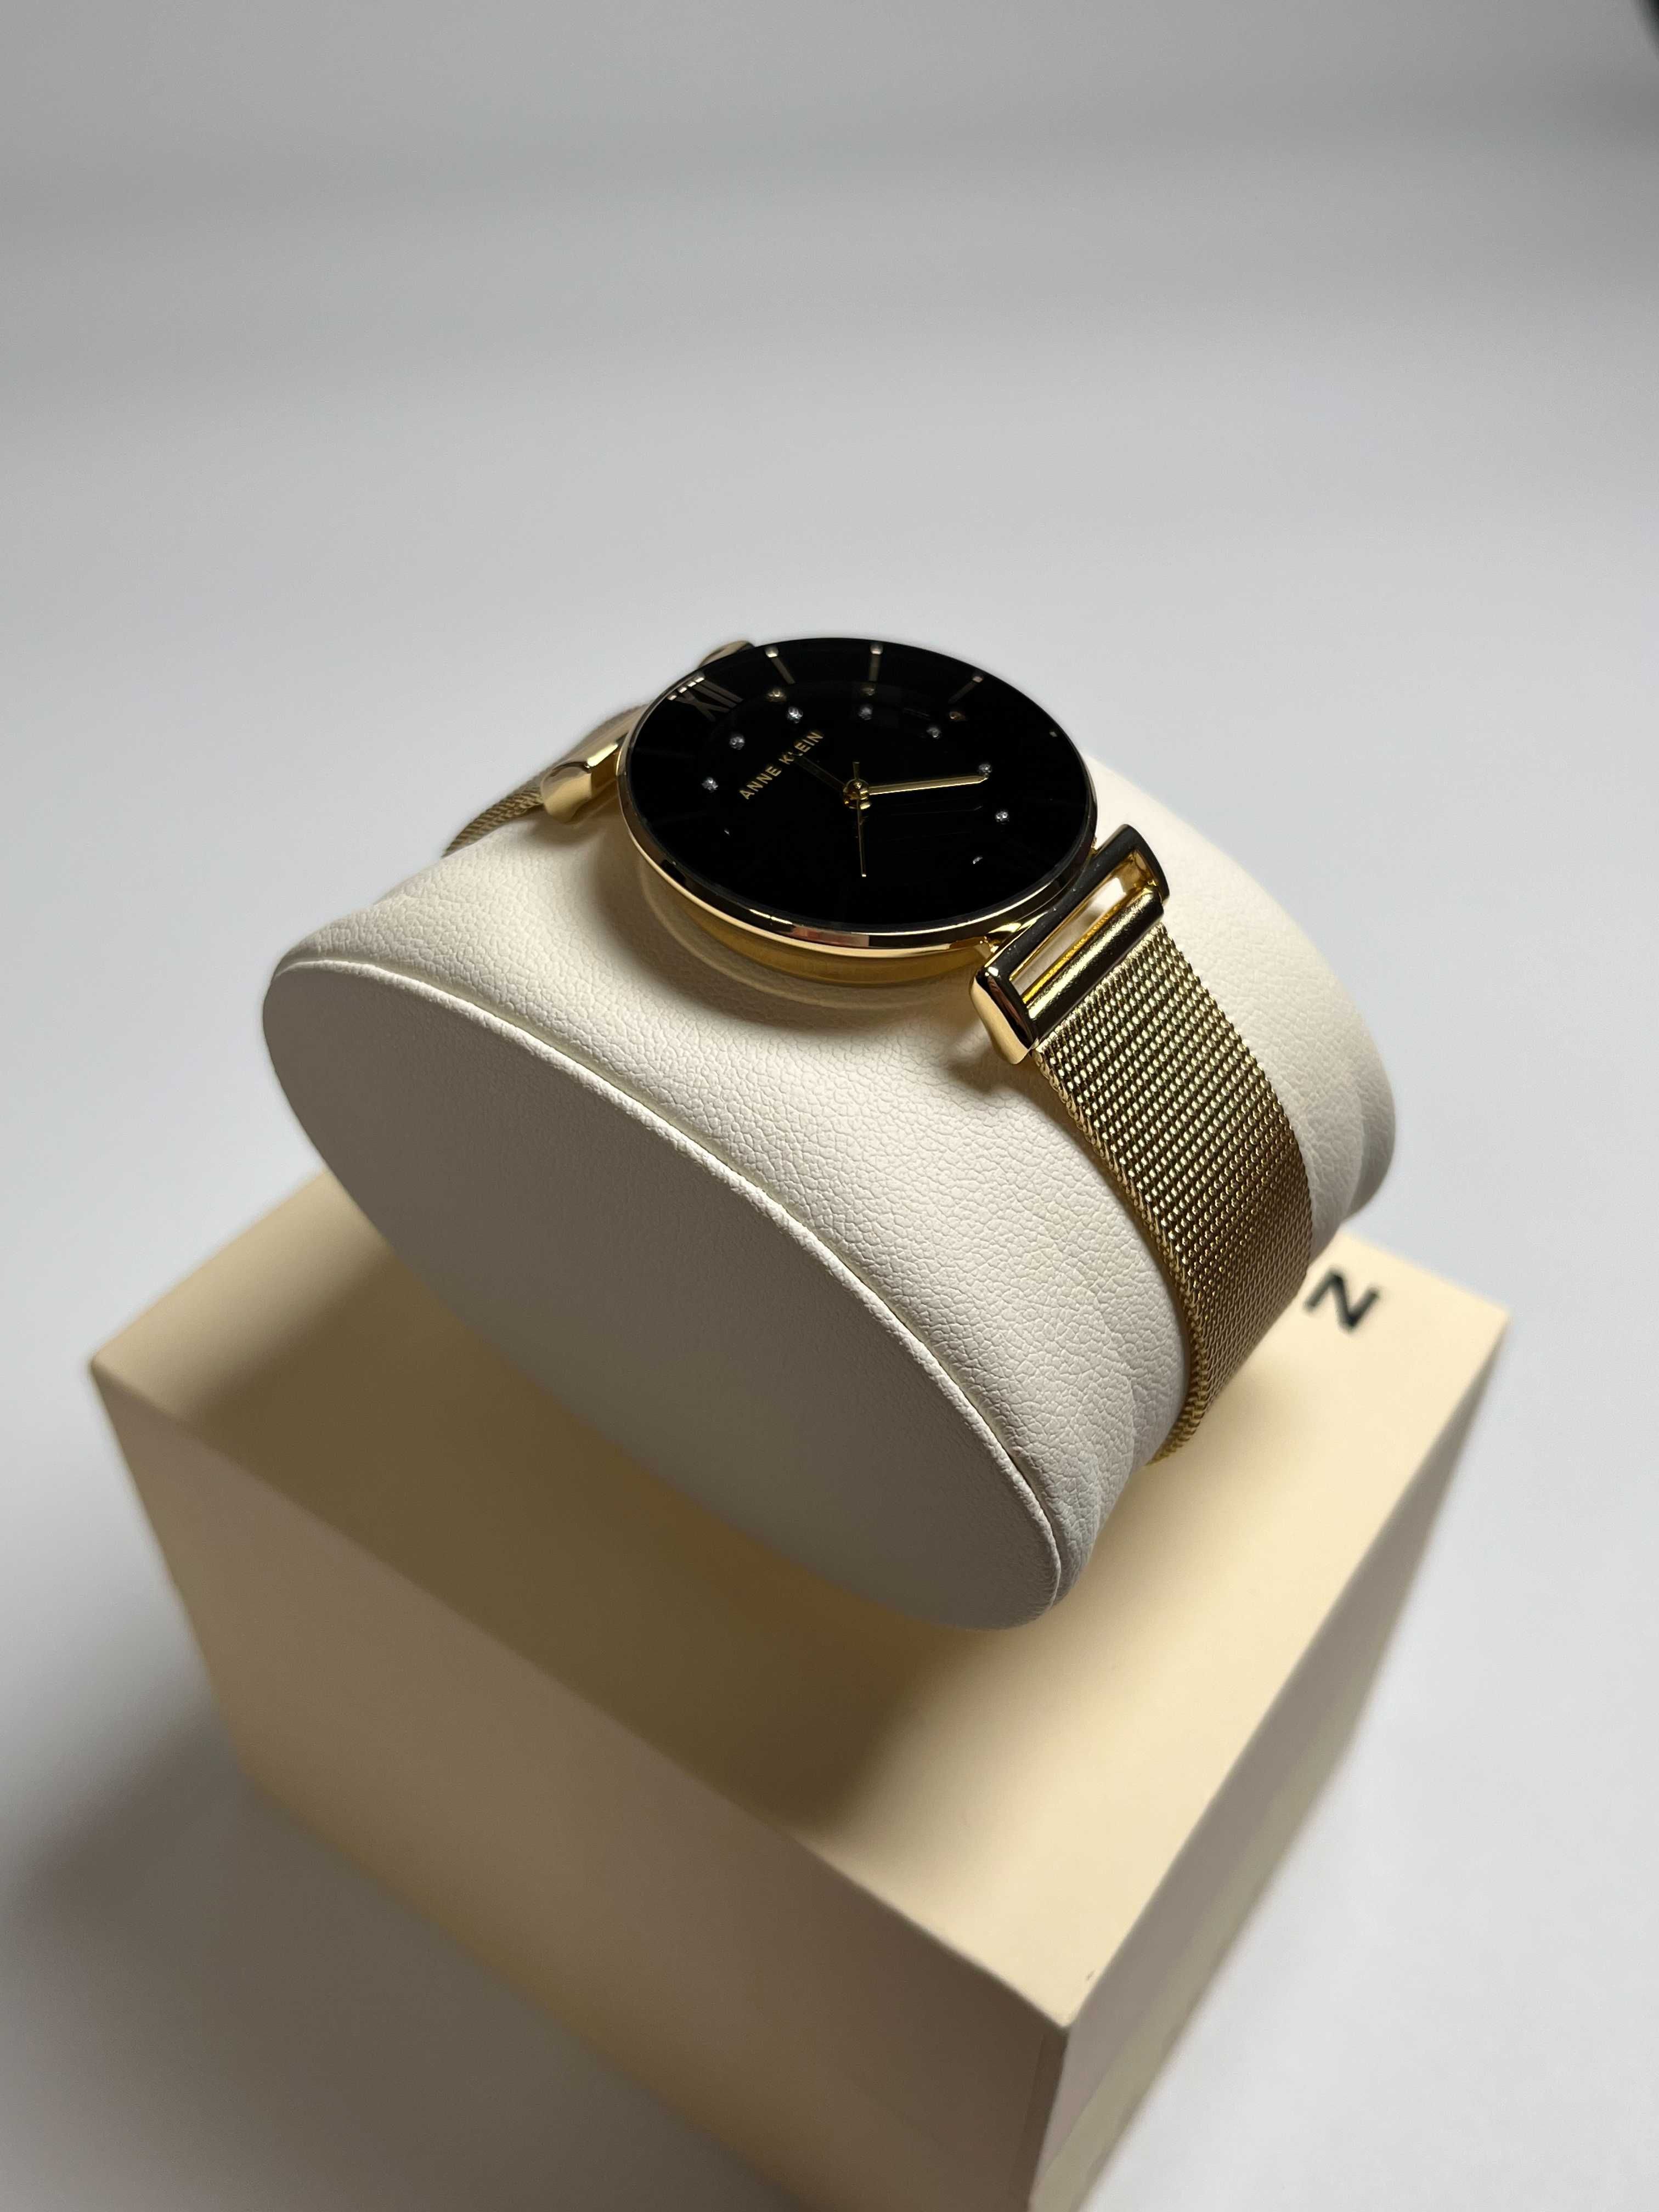 Годинник Anne Klein AK/3780BKGB, золотистий круглий годинник, часы